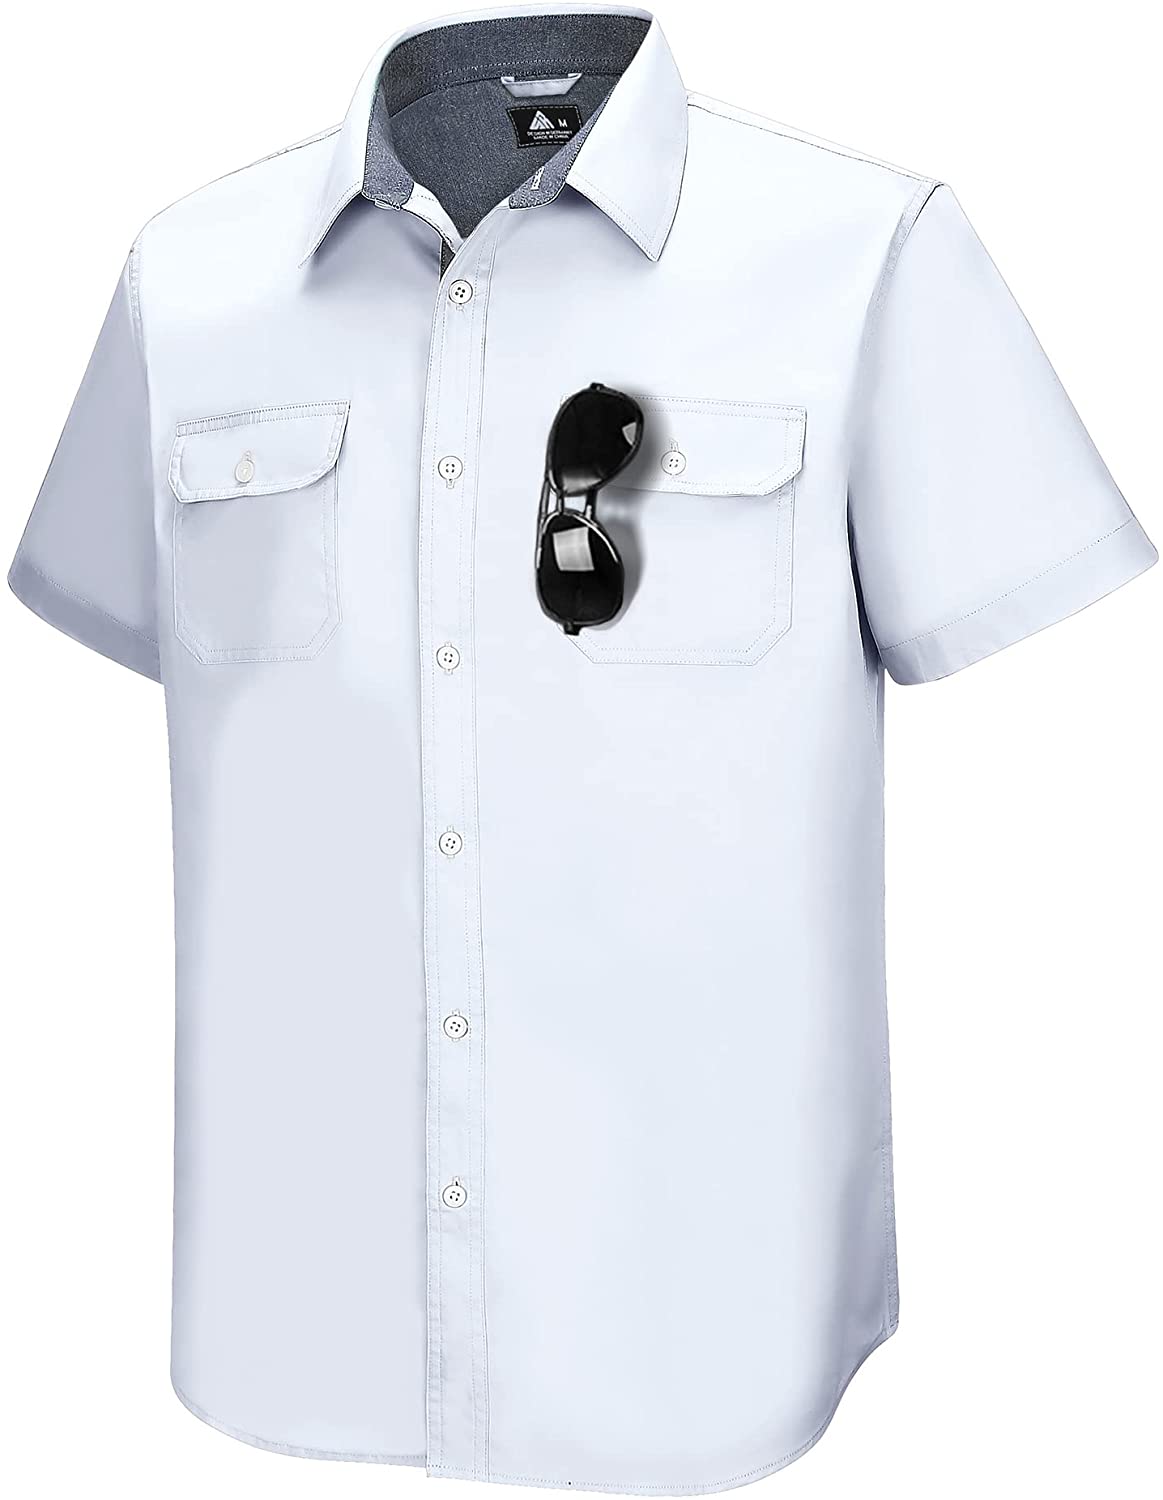 ZITY Flannel Plaid Shirt for Men Regular Fit Long Sleeve Casual Button Down  Shir | eBay